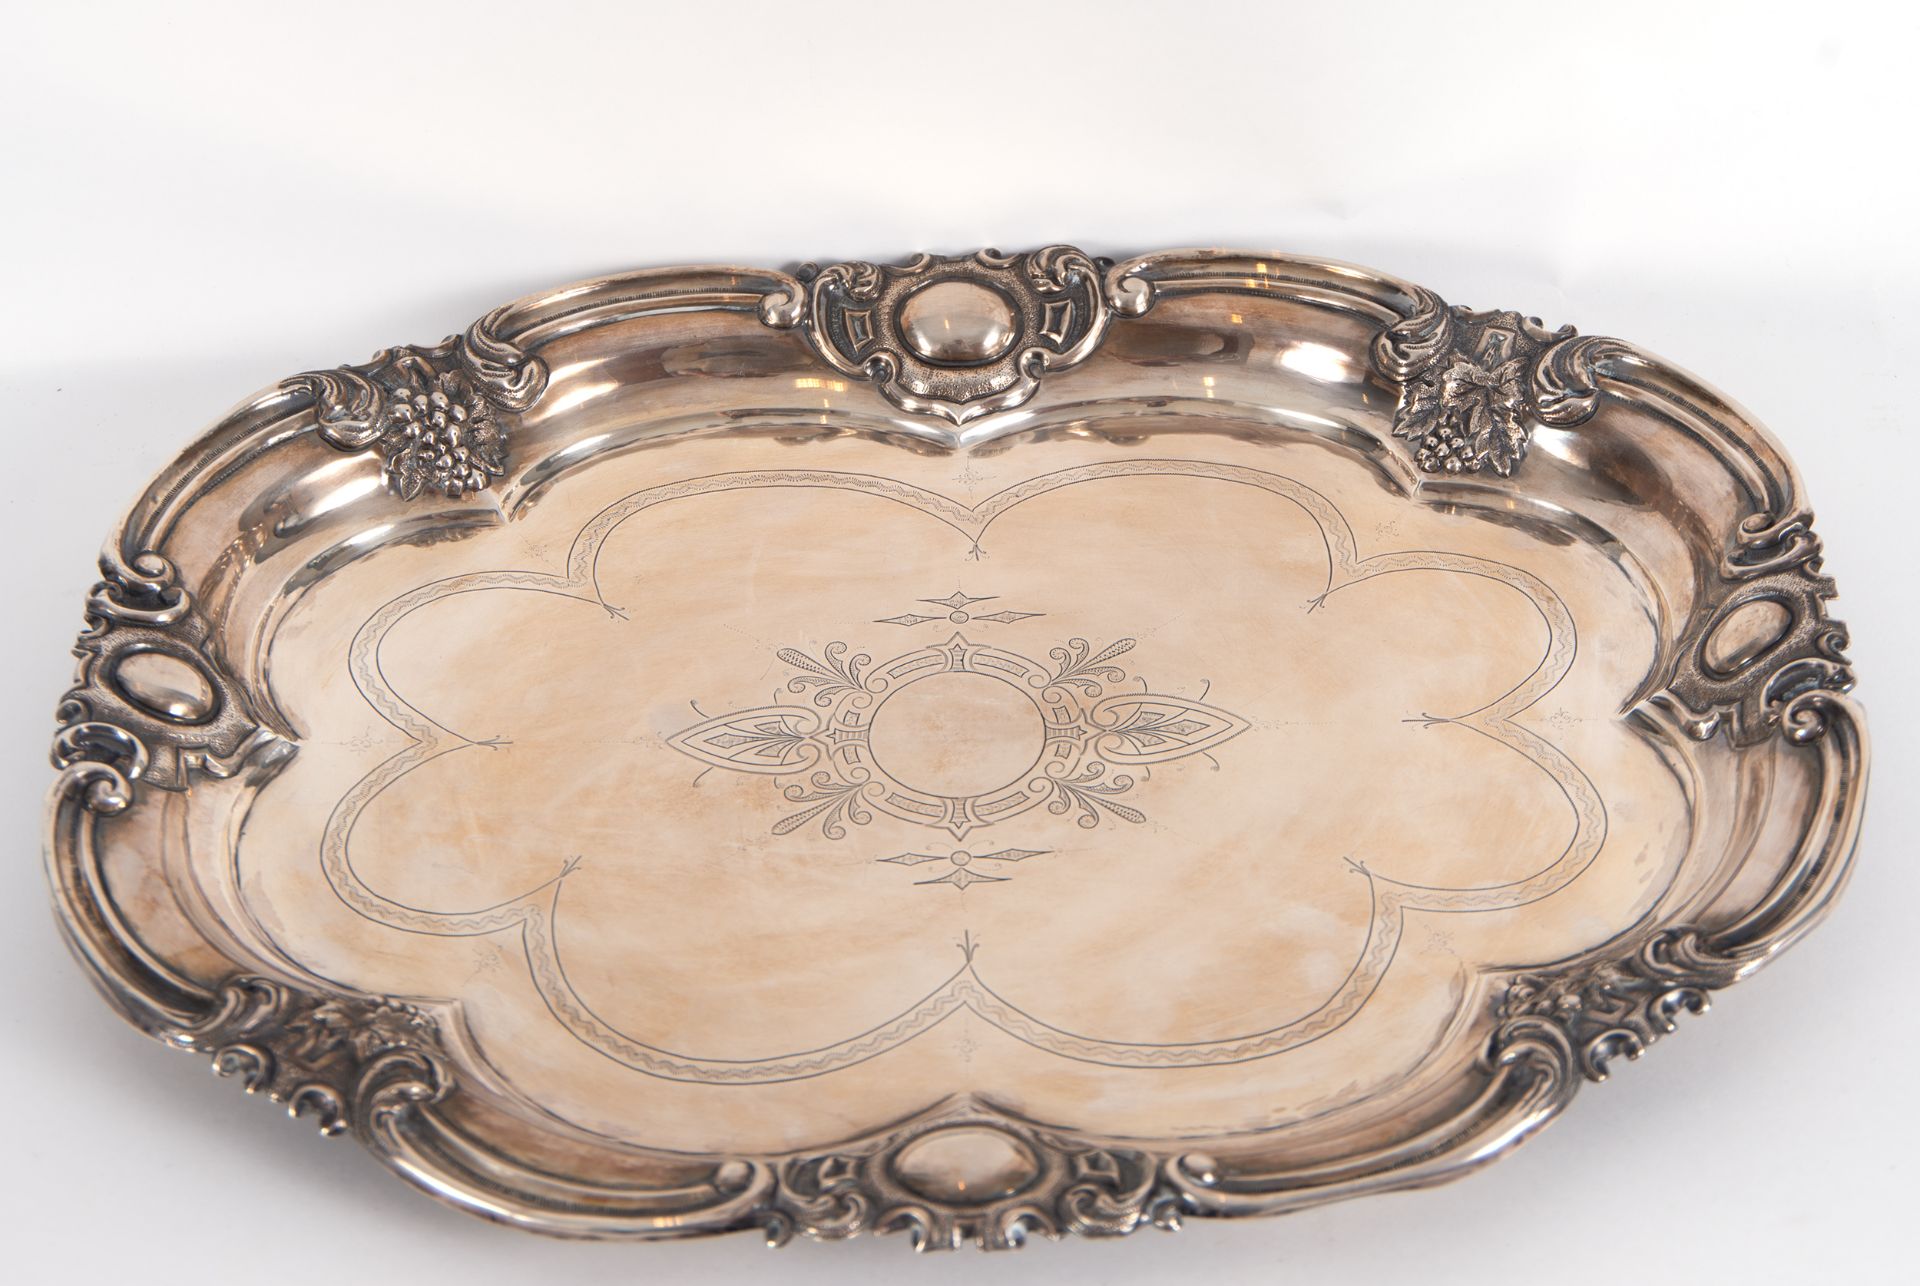 Silver tray, Barcelona marks, Rovira silversmith punches, 19th century